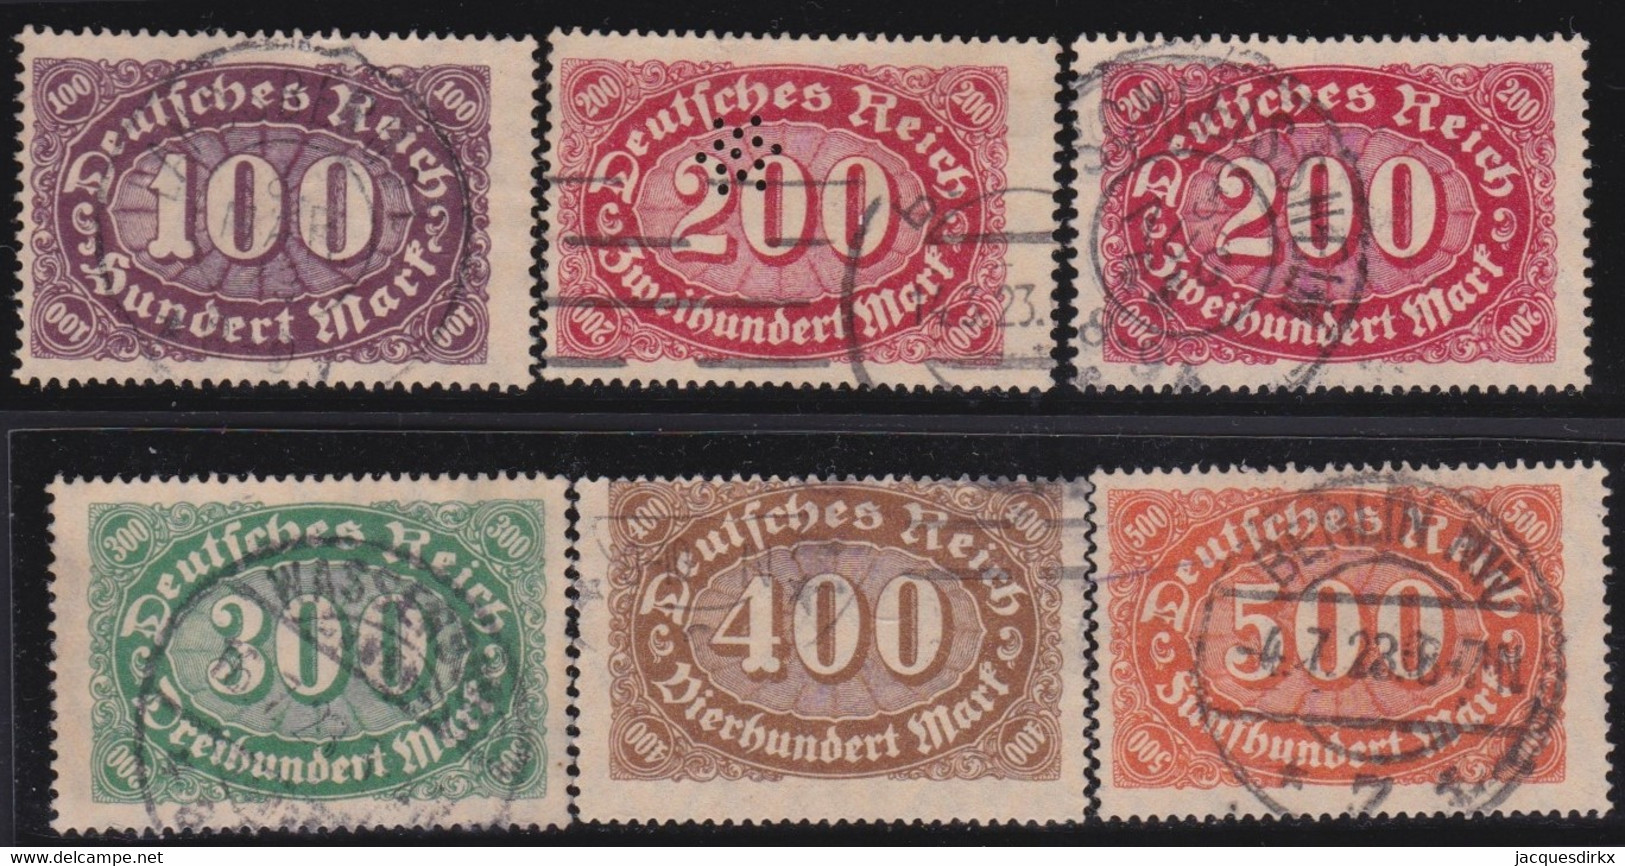 Deutsches Reich   .    Michel   .   219/233     .    O    .   Gestempelt   .    /    .   Cancelled - Used Stamps